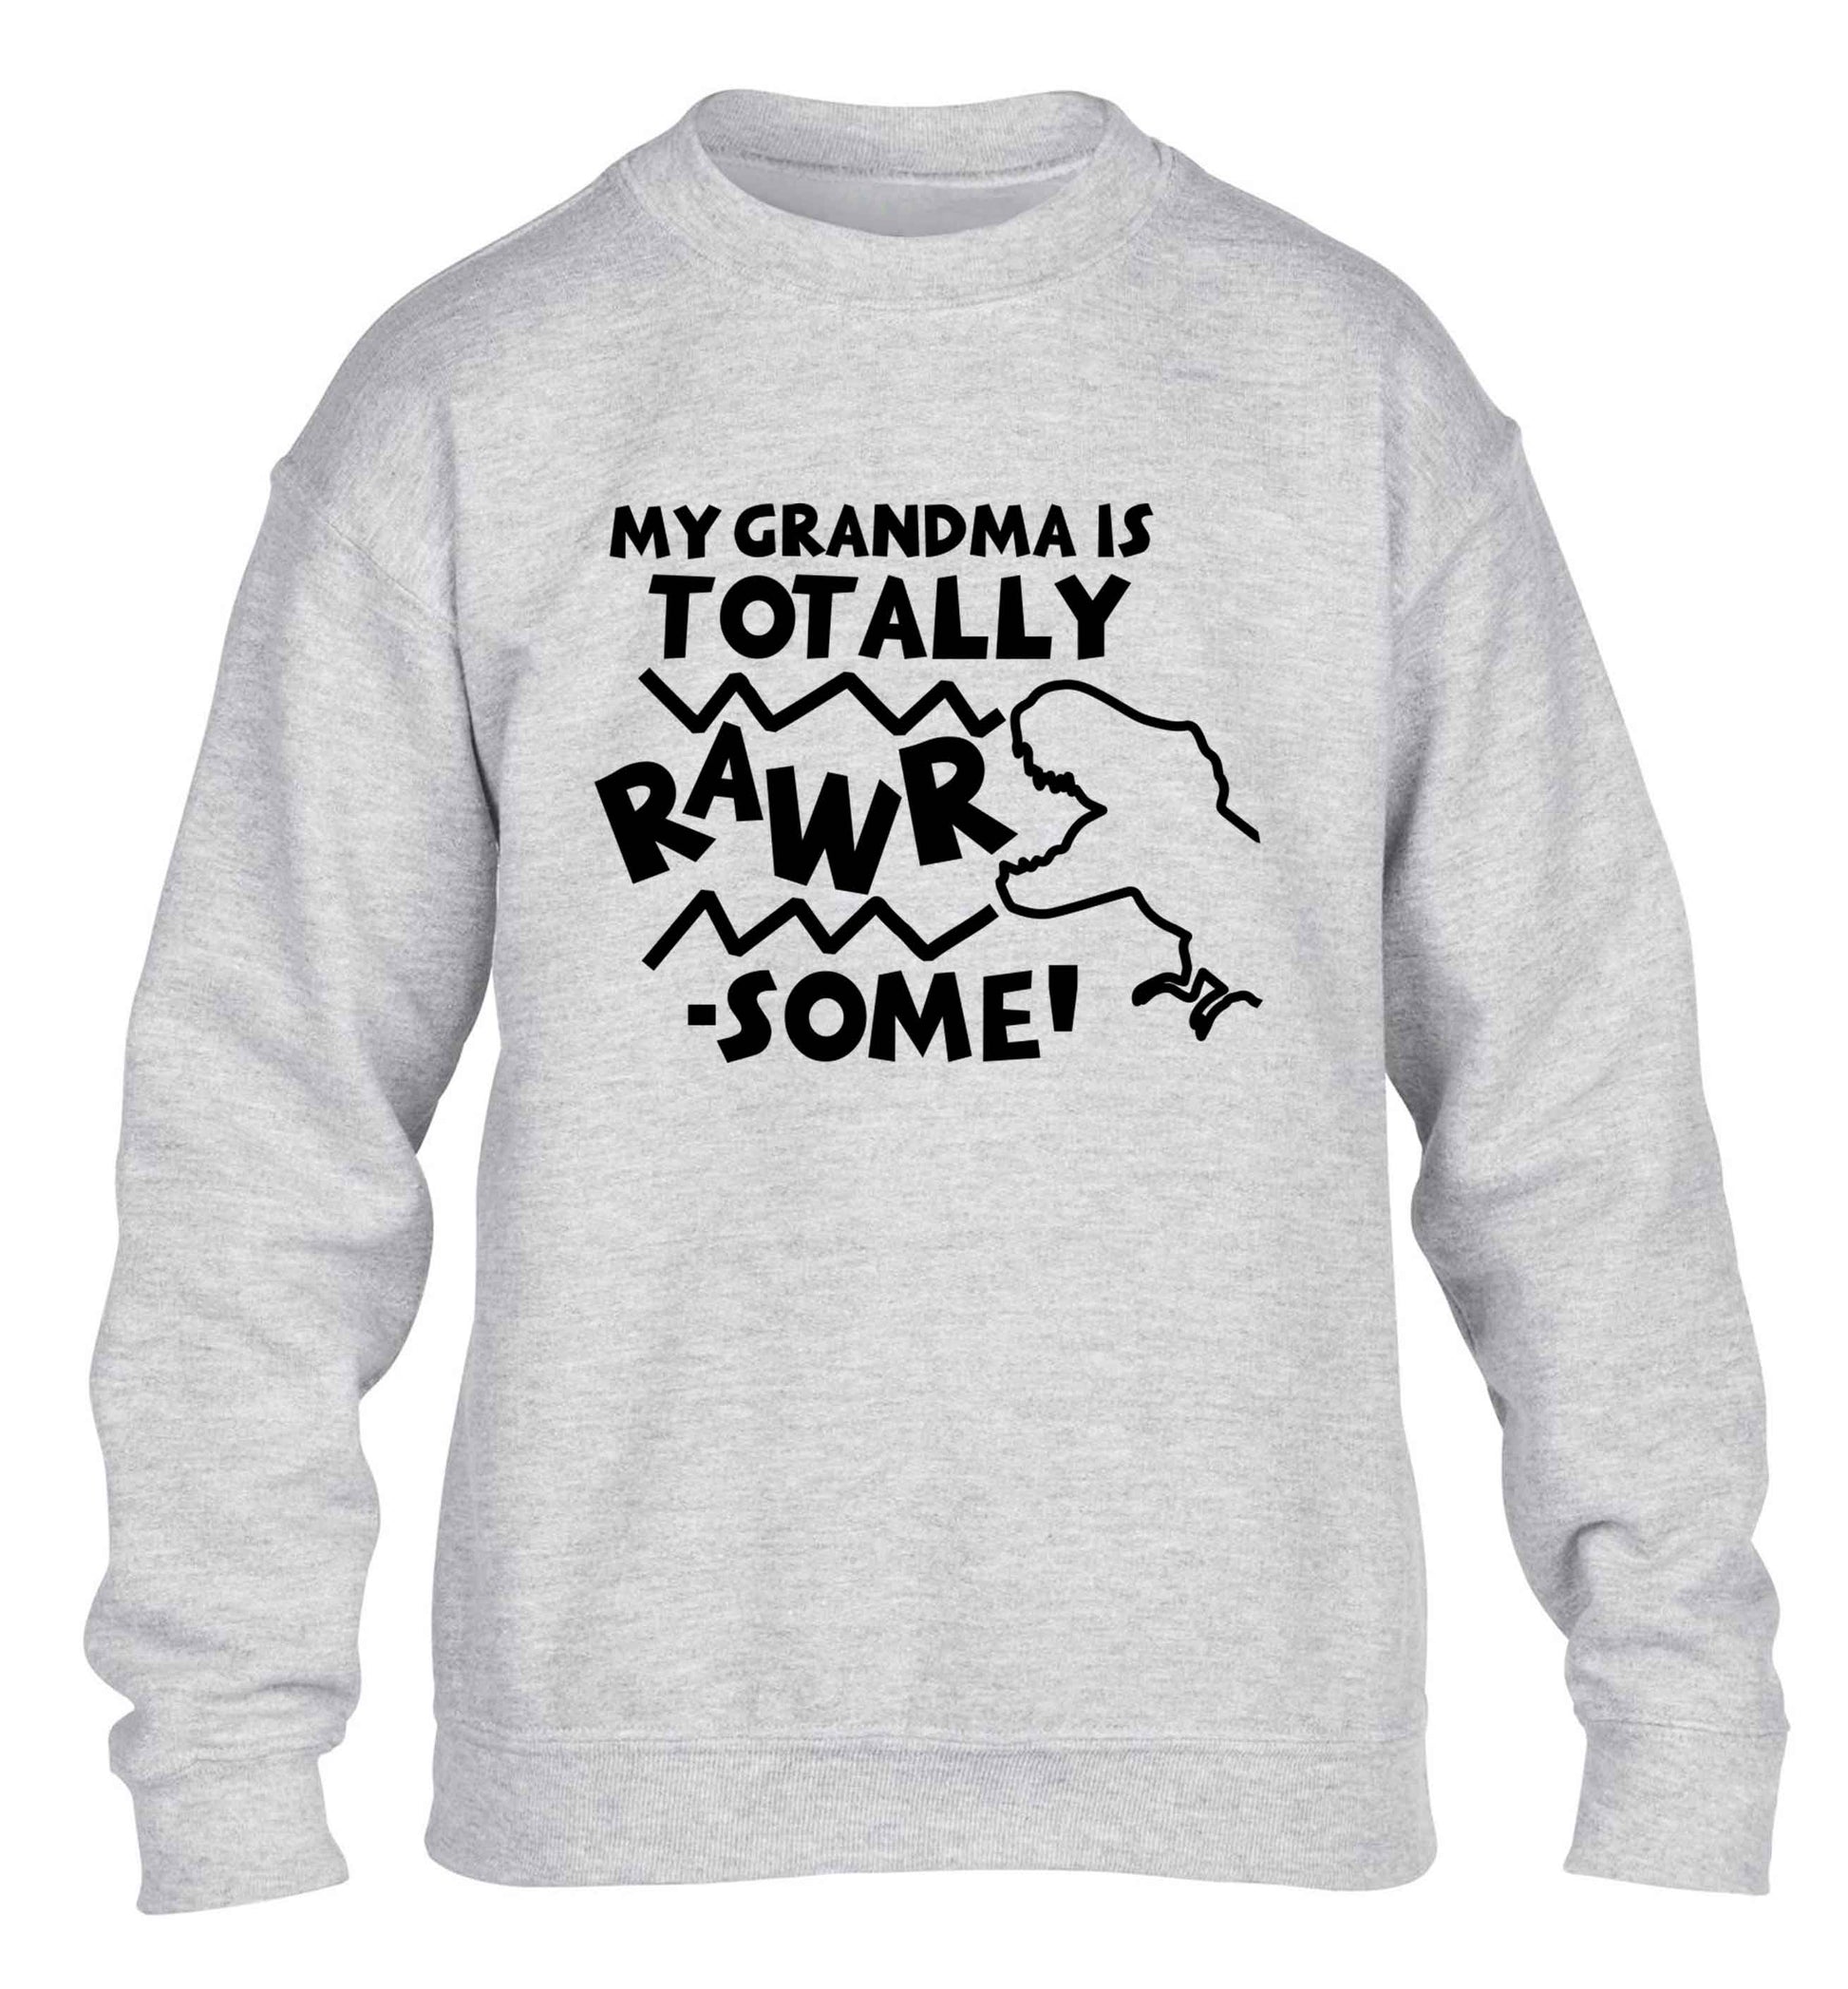 My grandma is totally rawrsome children's grey sweater 12-13 Years